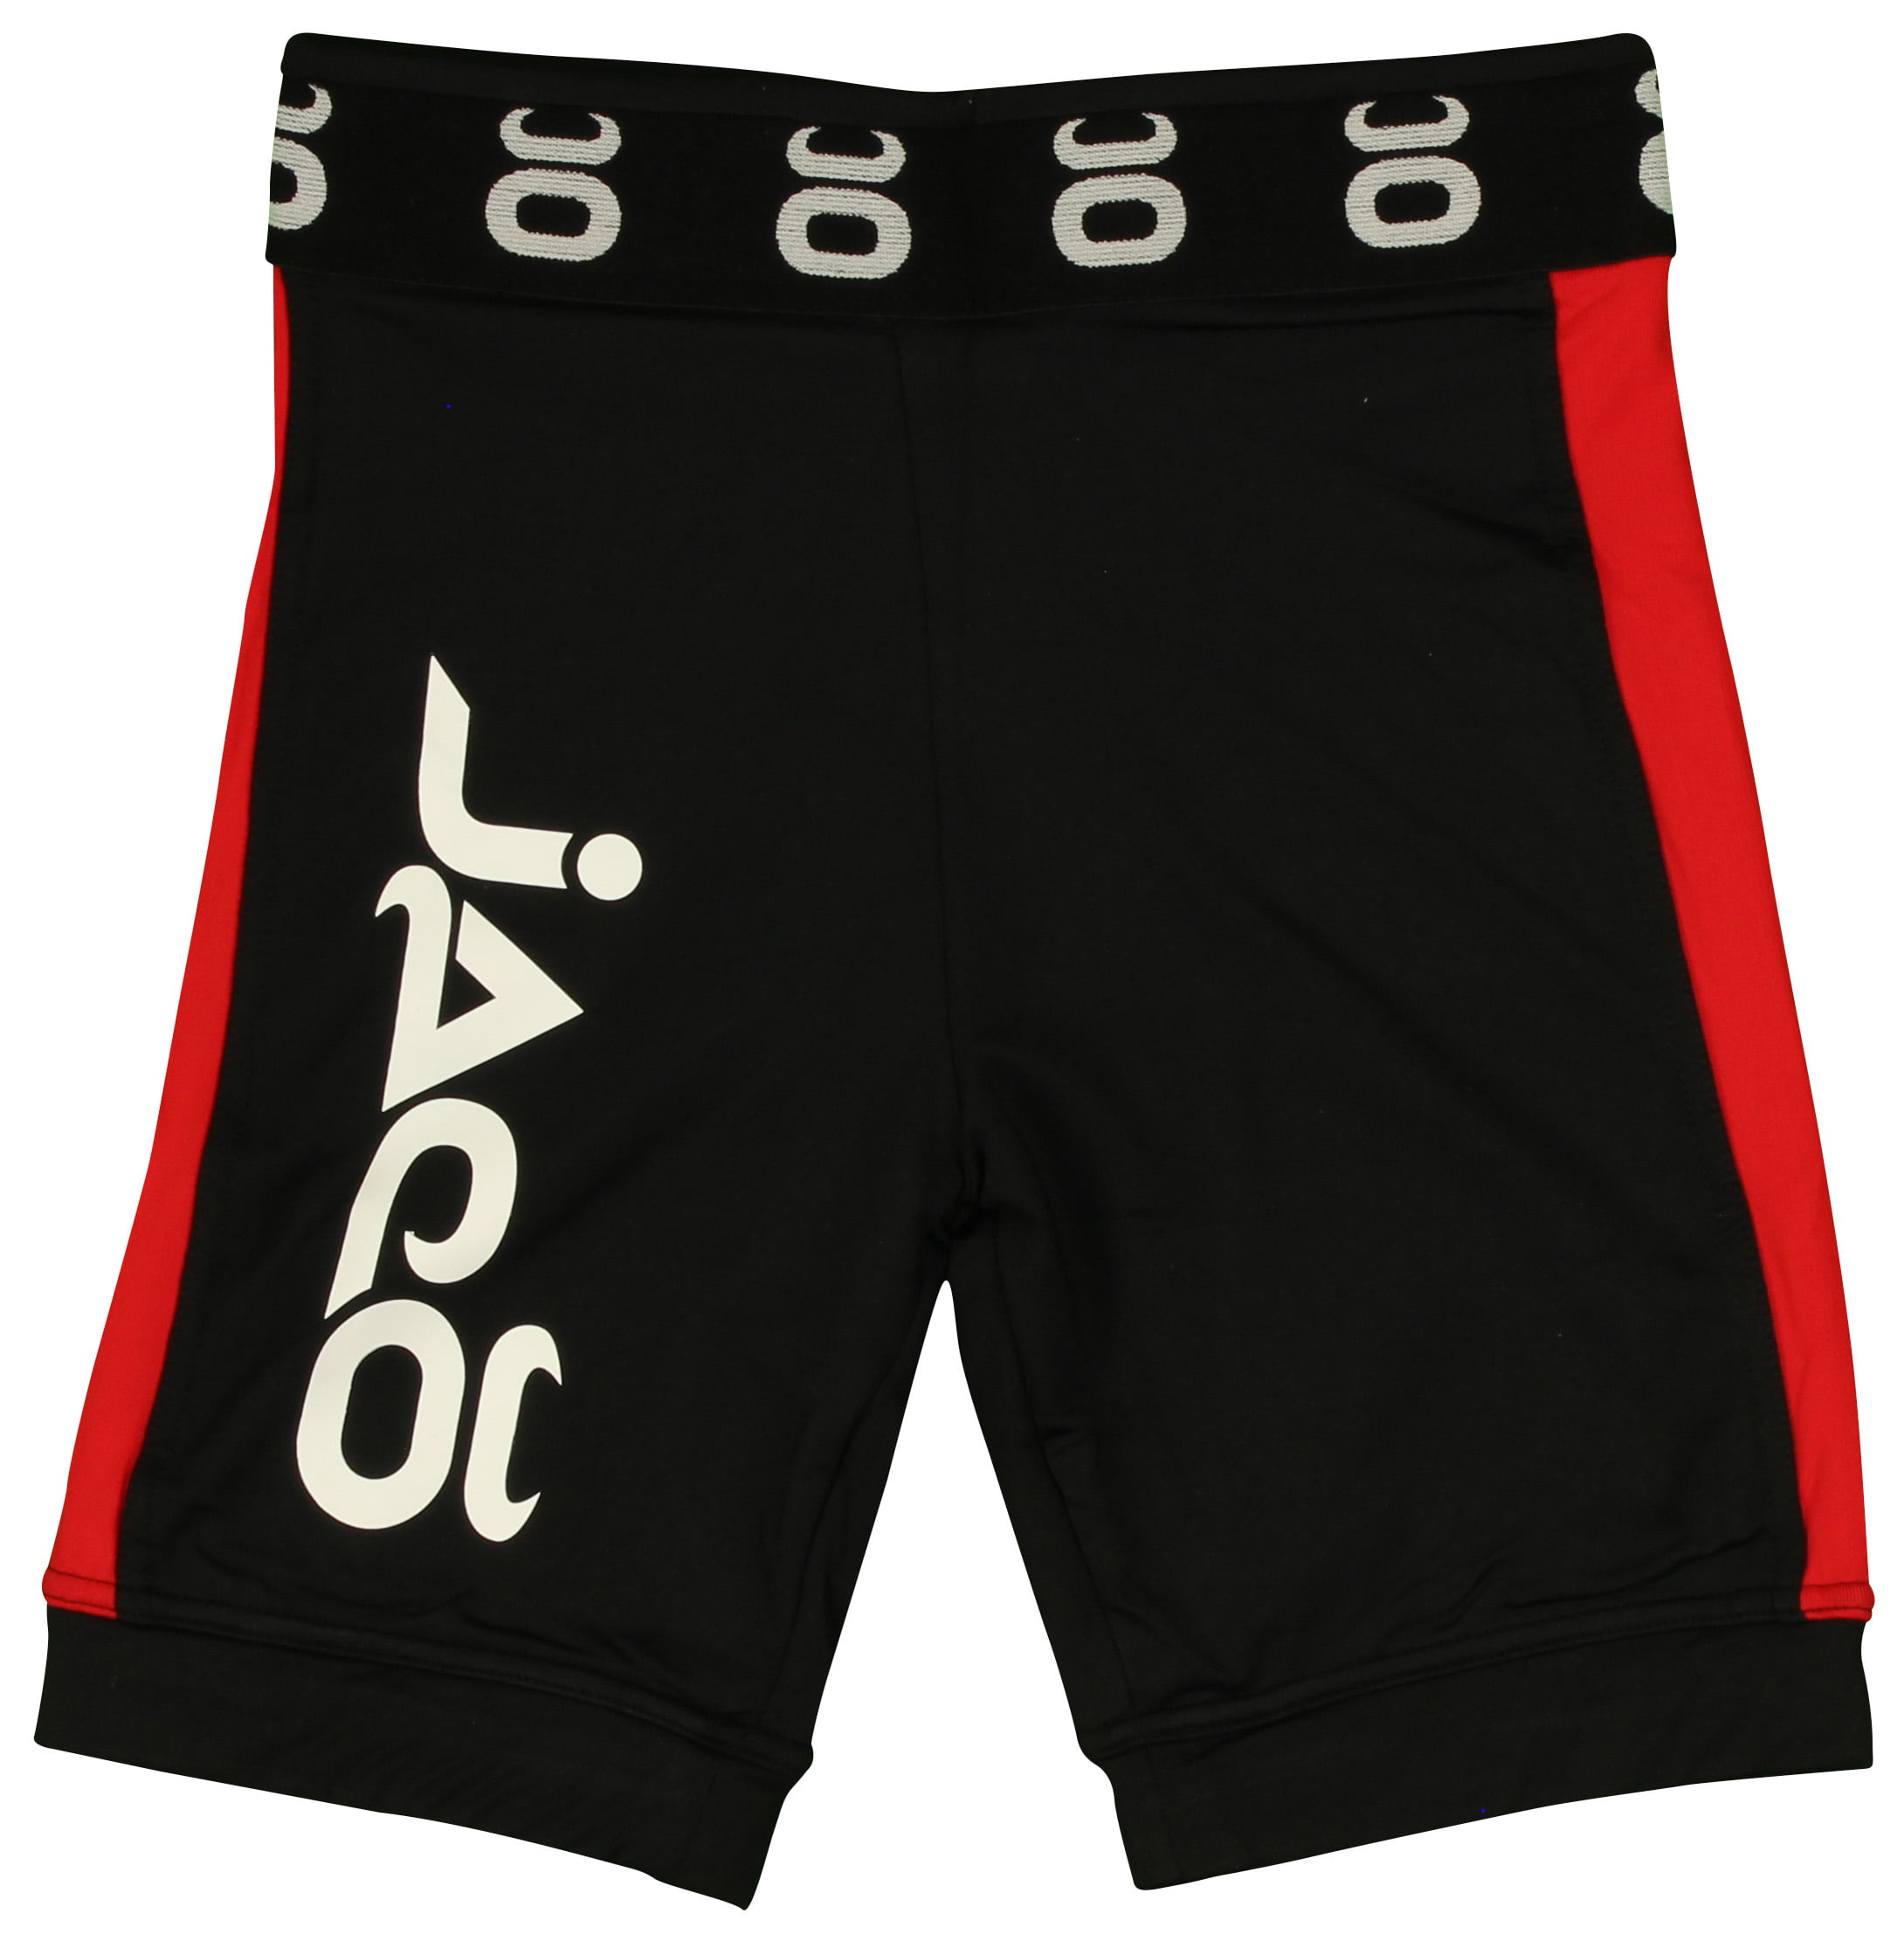 Jaco Vale Tudo Fight Shorts Long L XL BJJ Jiu Jitsu Wrestling MMA UFC Black 